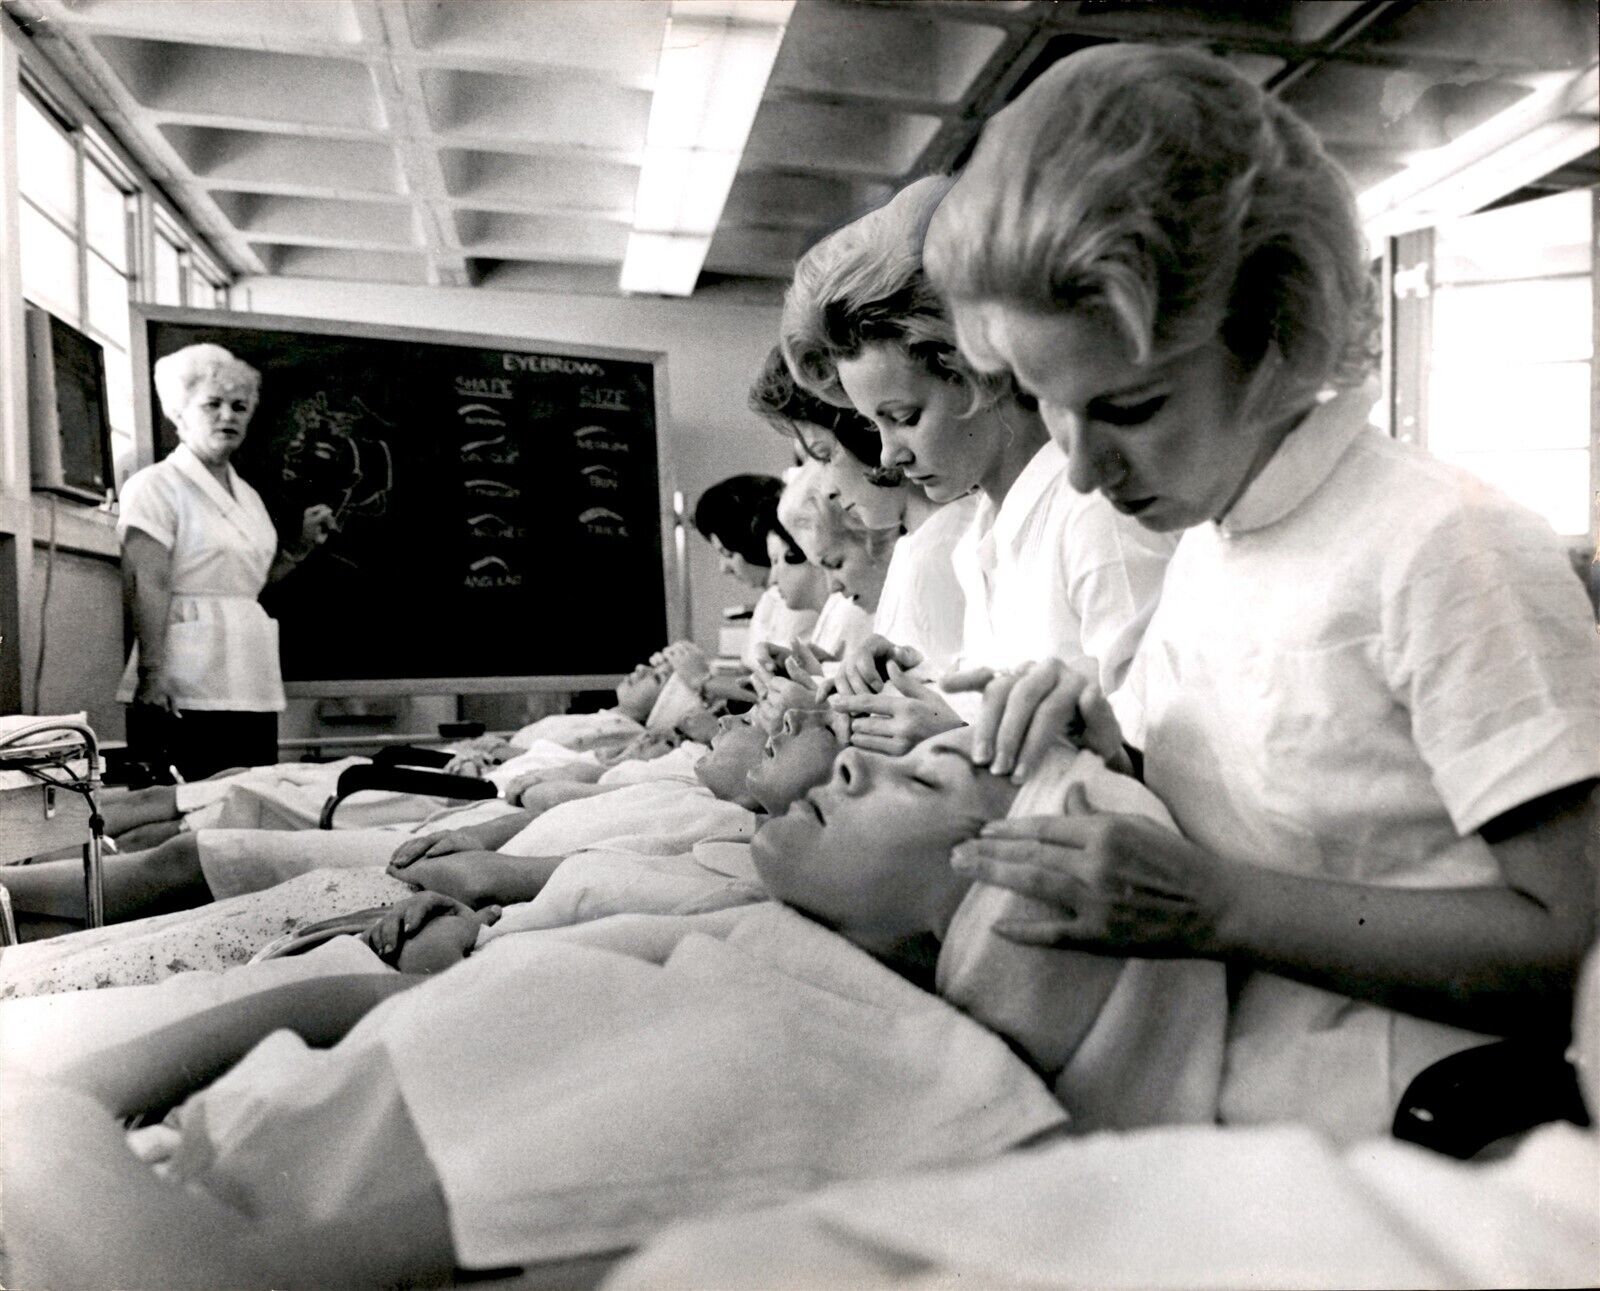 LG59 1963 Orig B. Sanders Photo MIAMI CENTRAL HIGH SCHOOL WOMEN'S MASSAGE CLASS